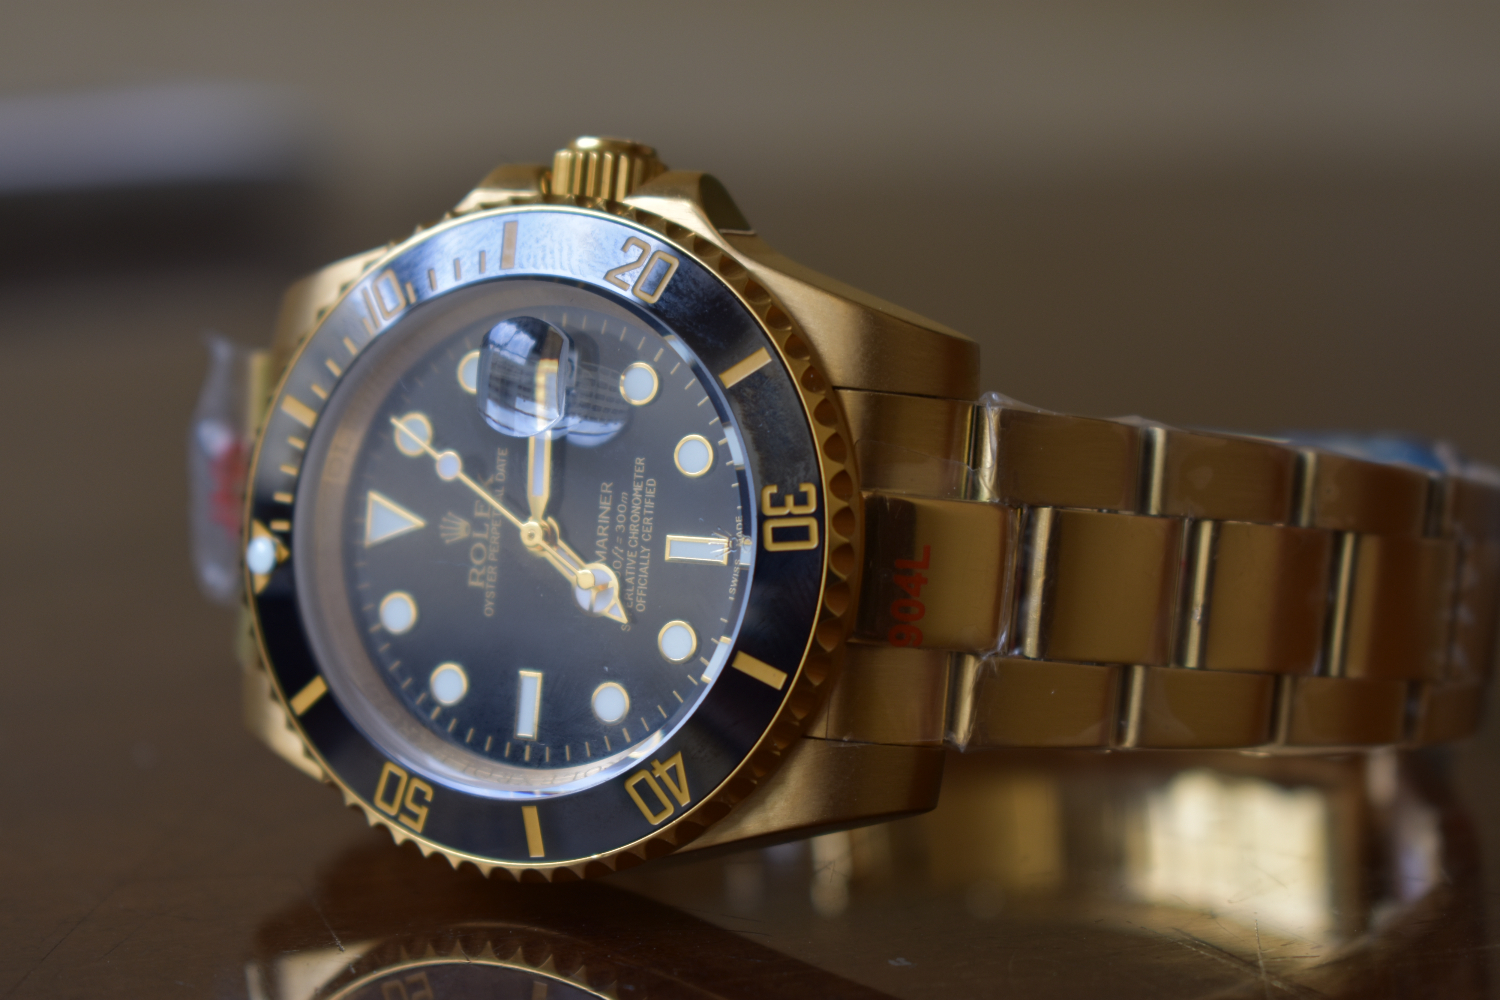 Rolex Submariner Date Yellow Gold Black Dial 126618 LN for sale in Nairobi,Kenya.